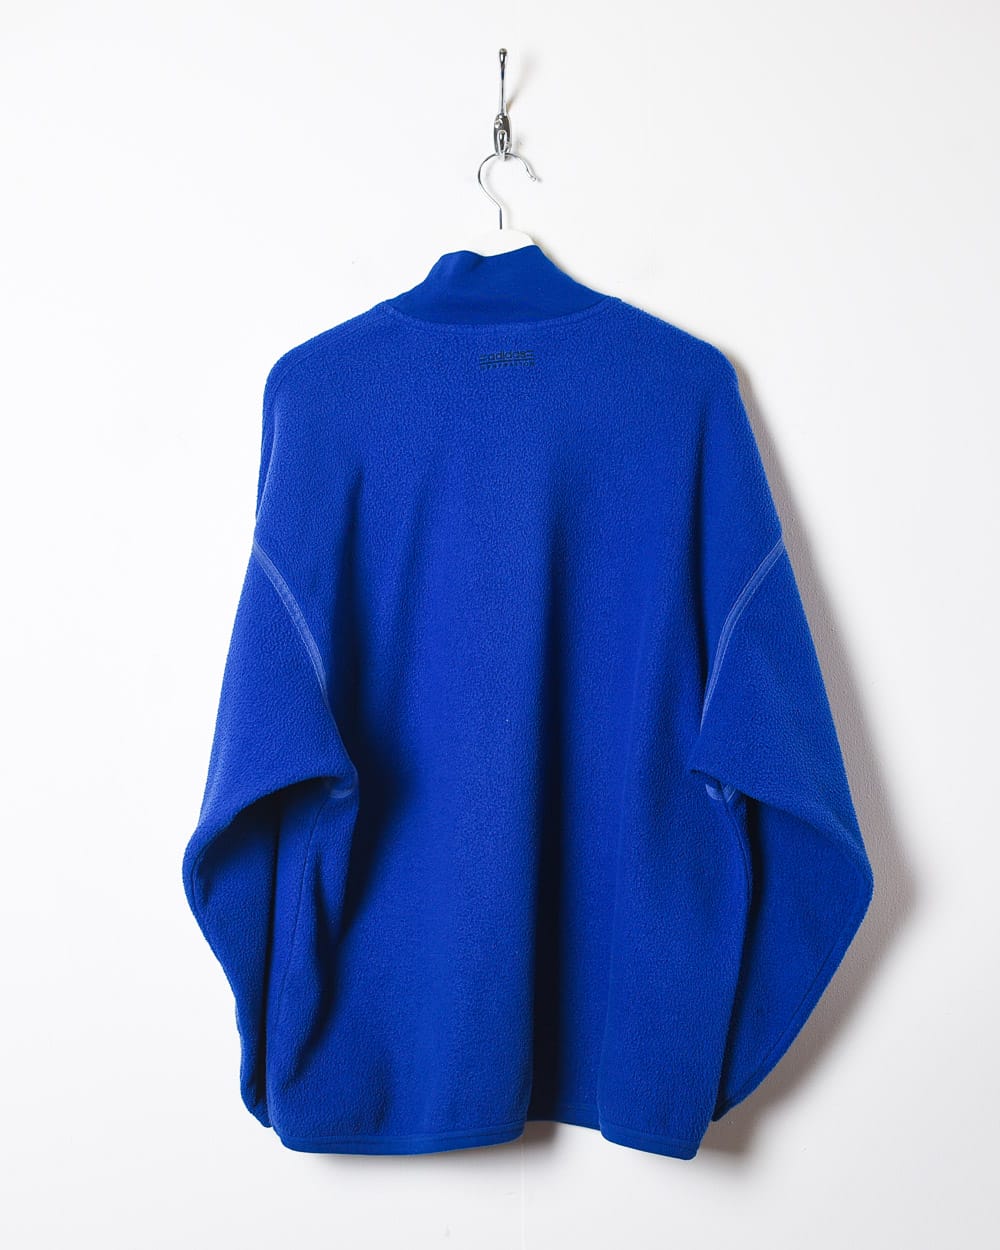 Blue Adidas 1/4 Zip Pullover Fleece - Large